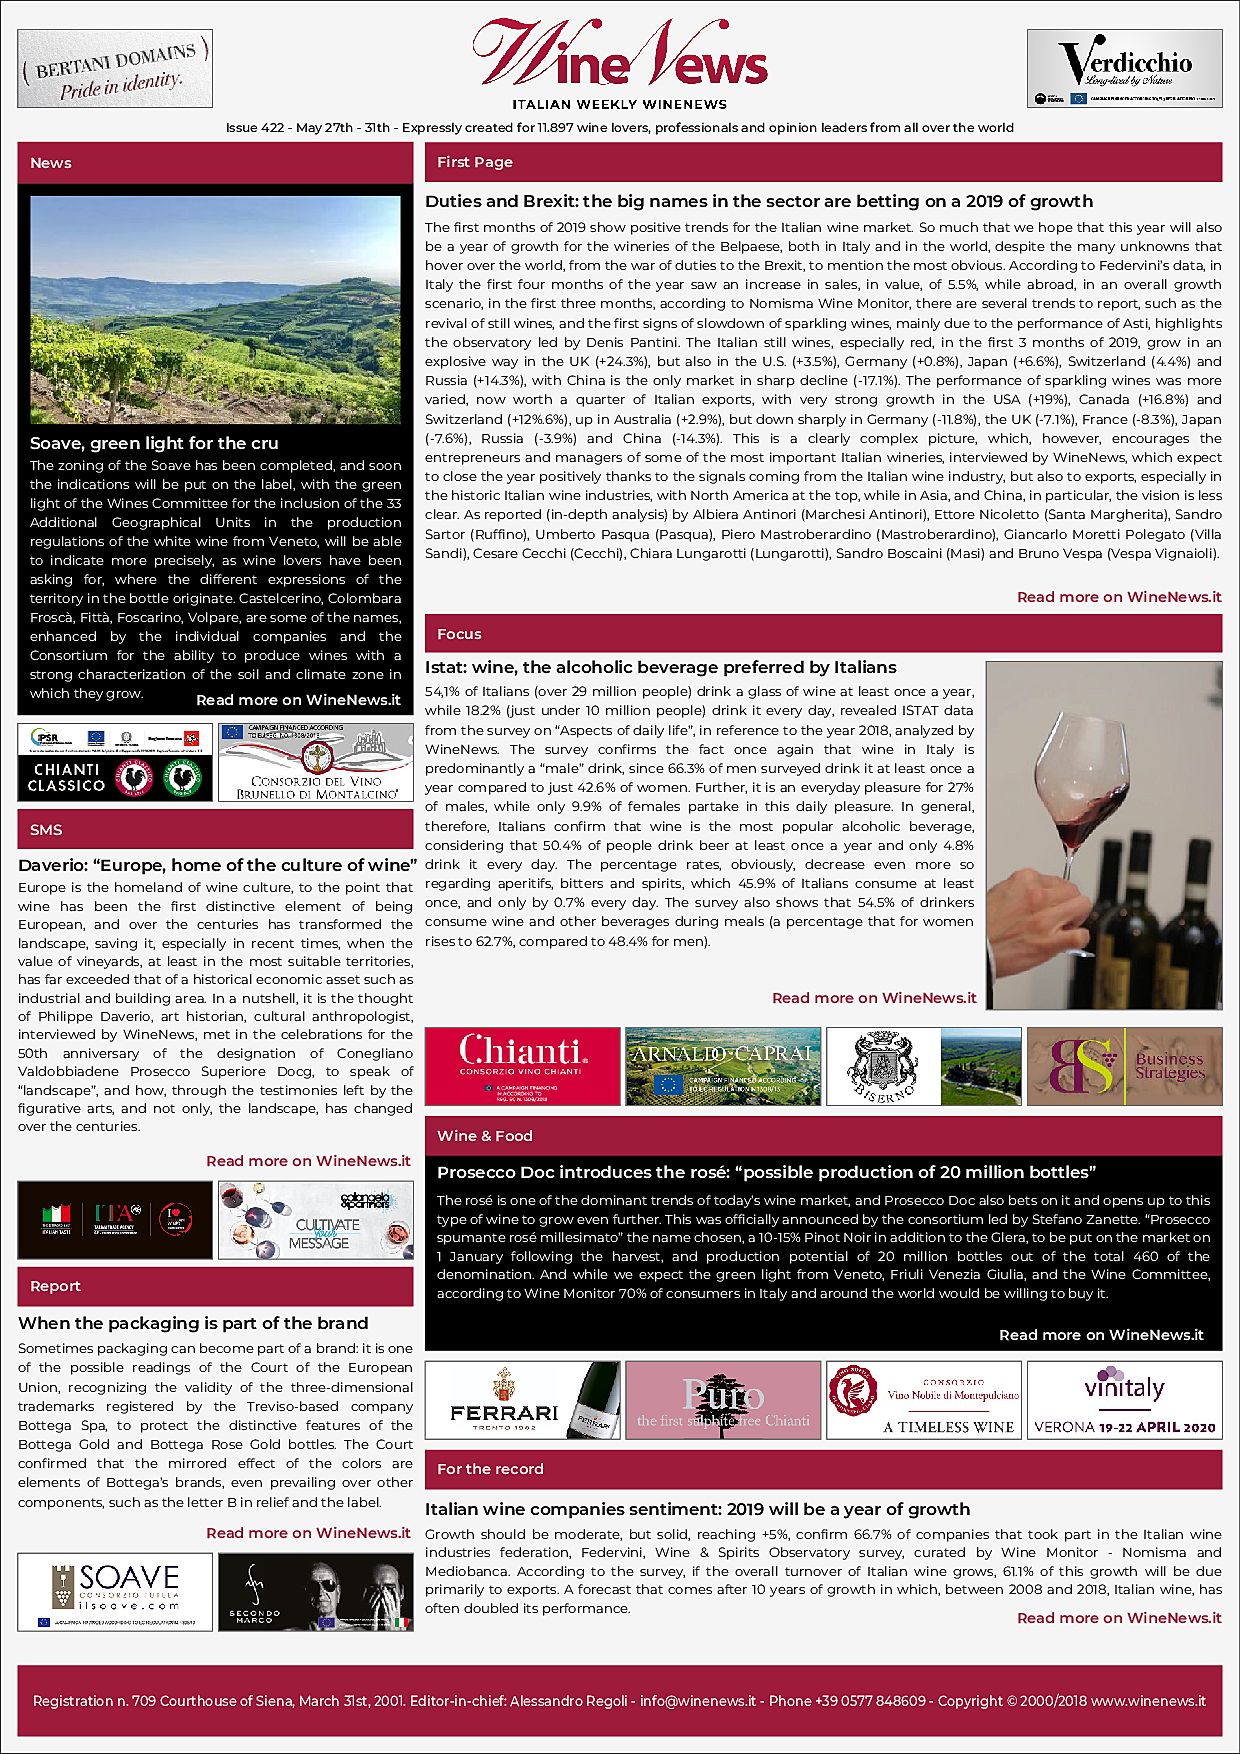 Italian Weekly WineNews